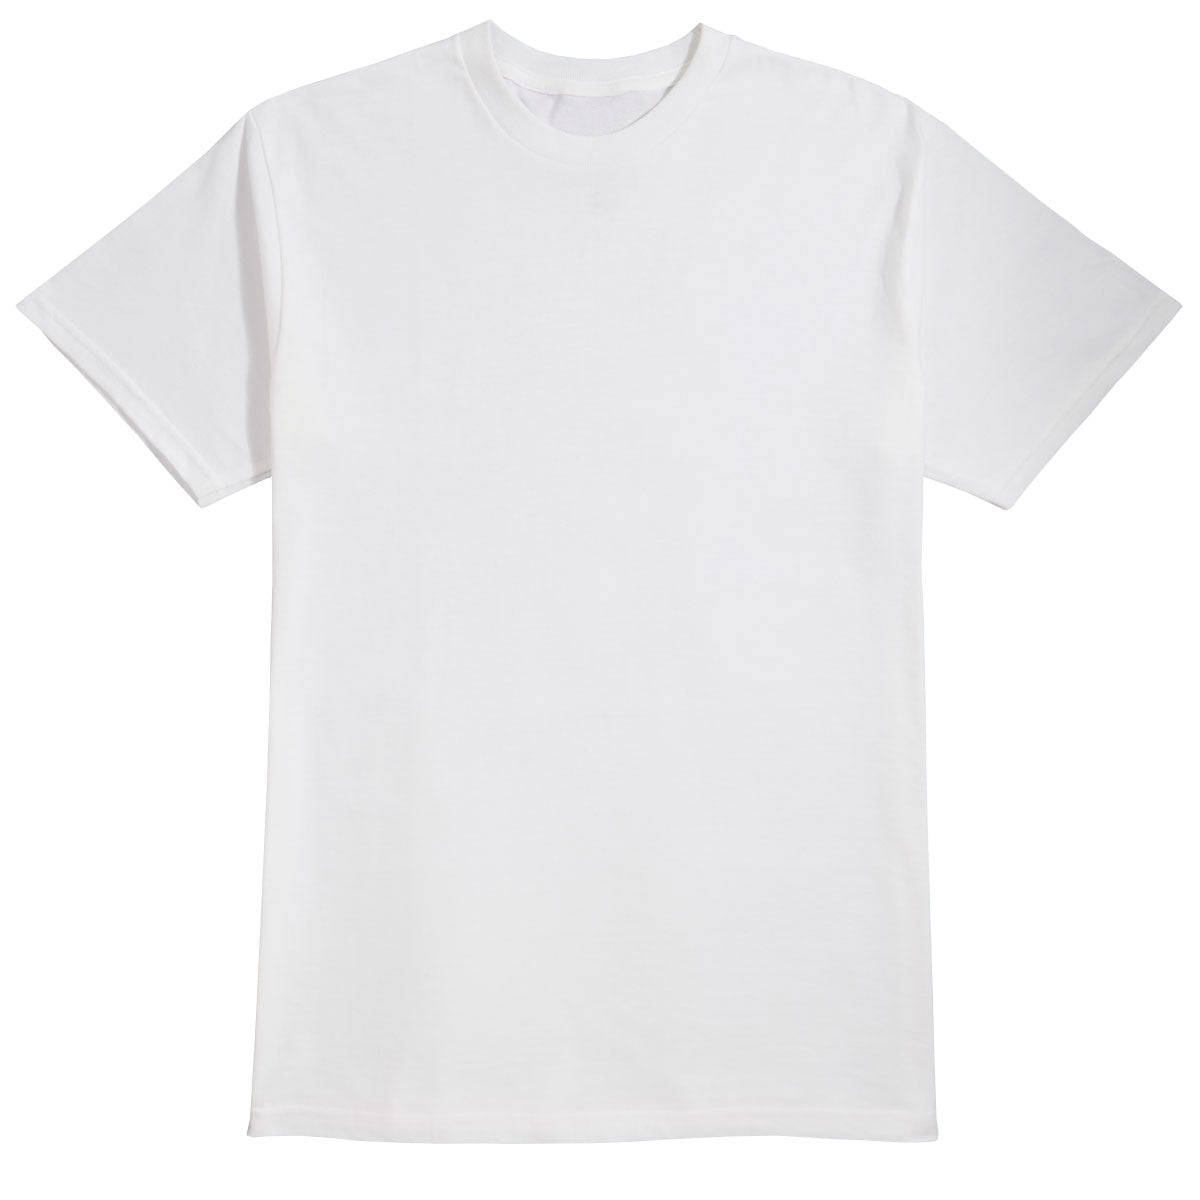 Alien Workshop Parenthesis Sticker T-Shirt - White - LG image 1